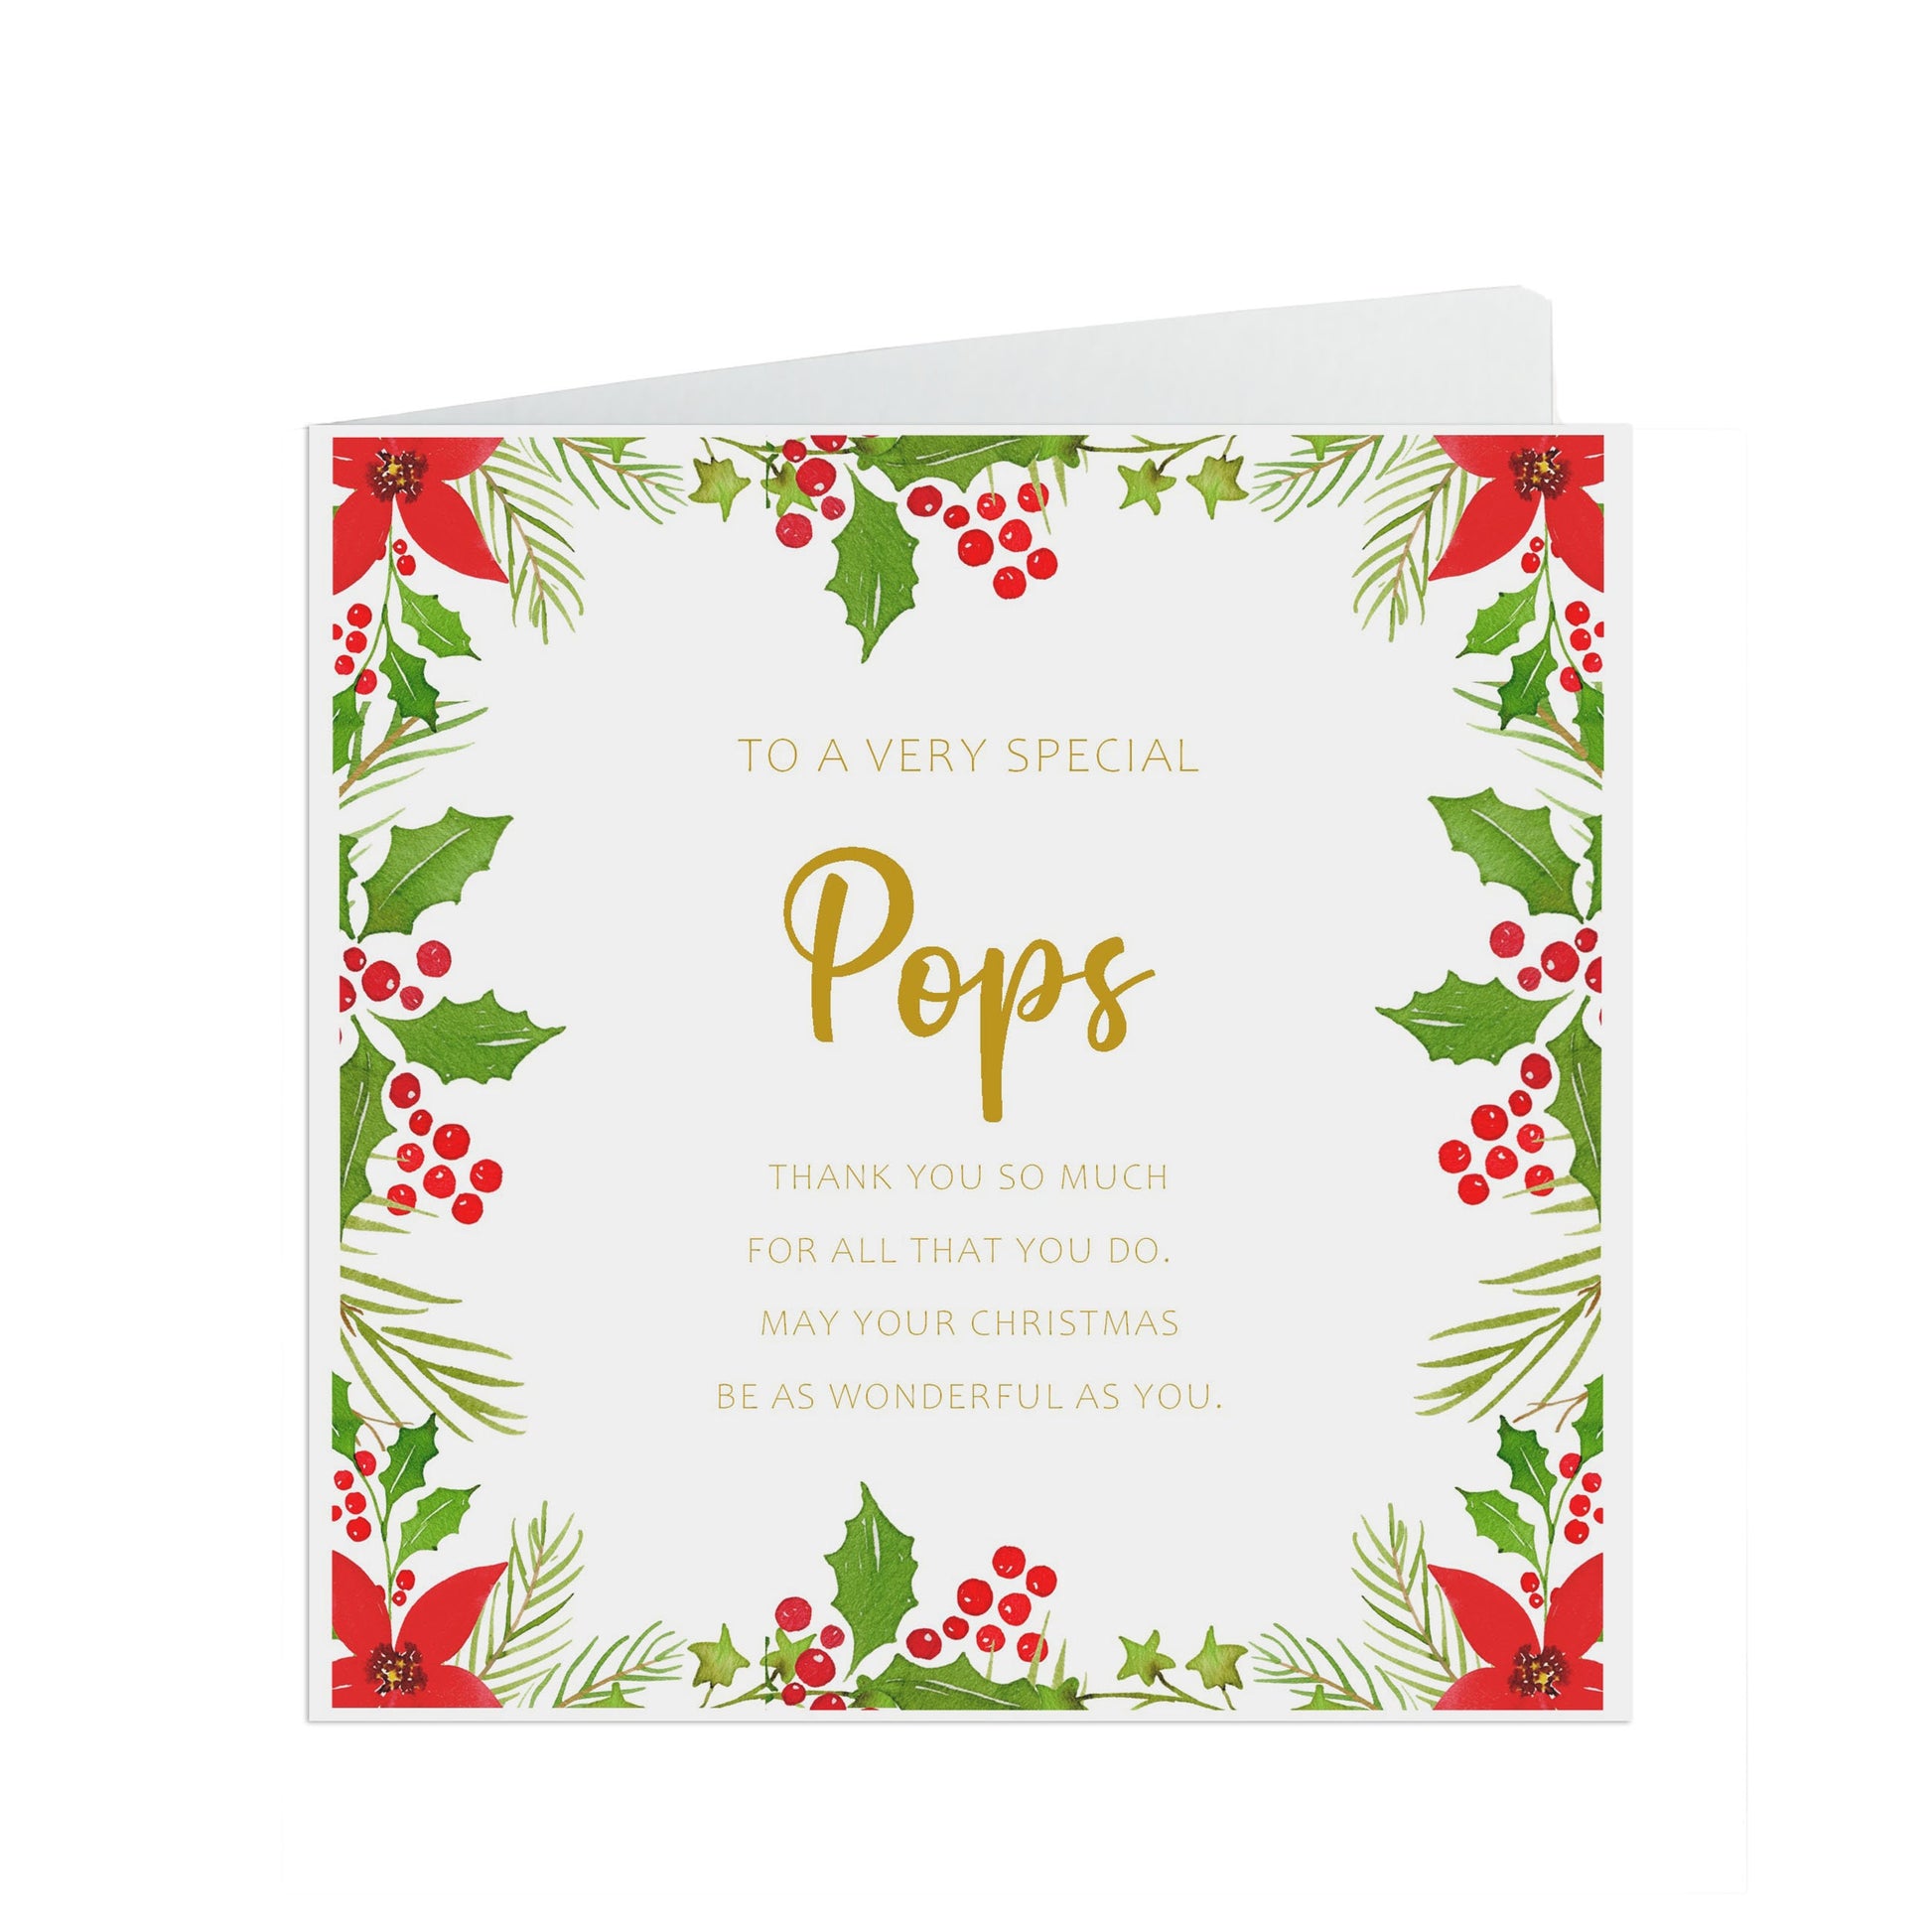 Pops Christmas Card, Traditional Poinsettia Design